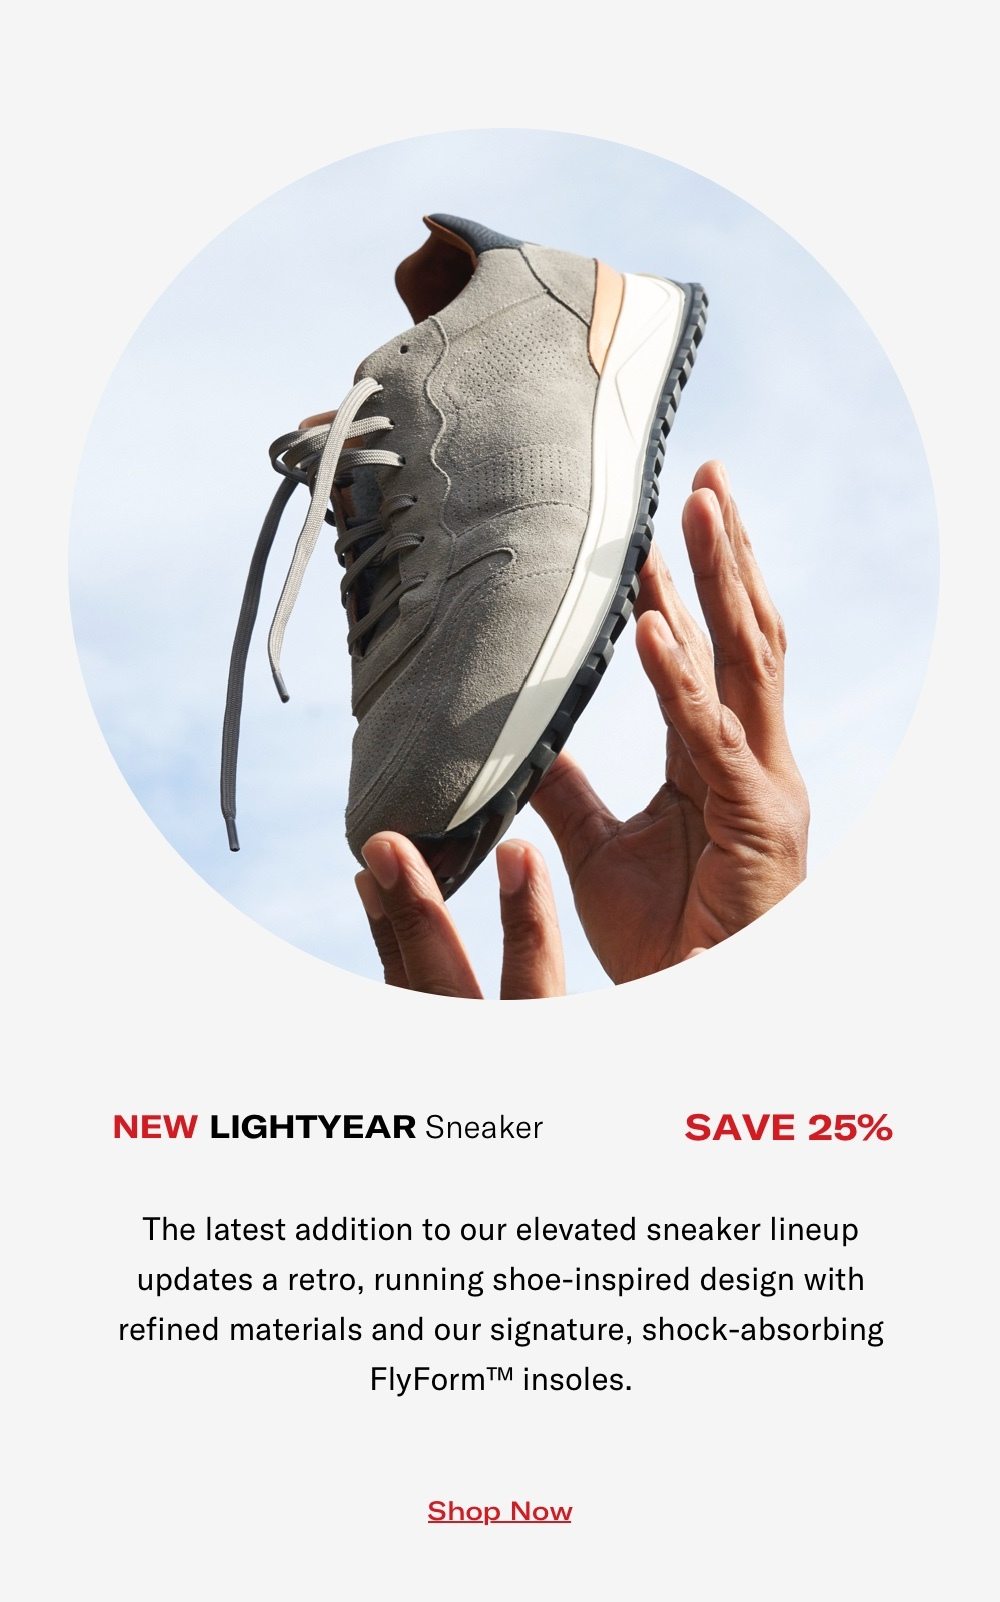 New Lightyear Sneaker - Save 25%